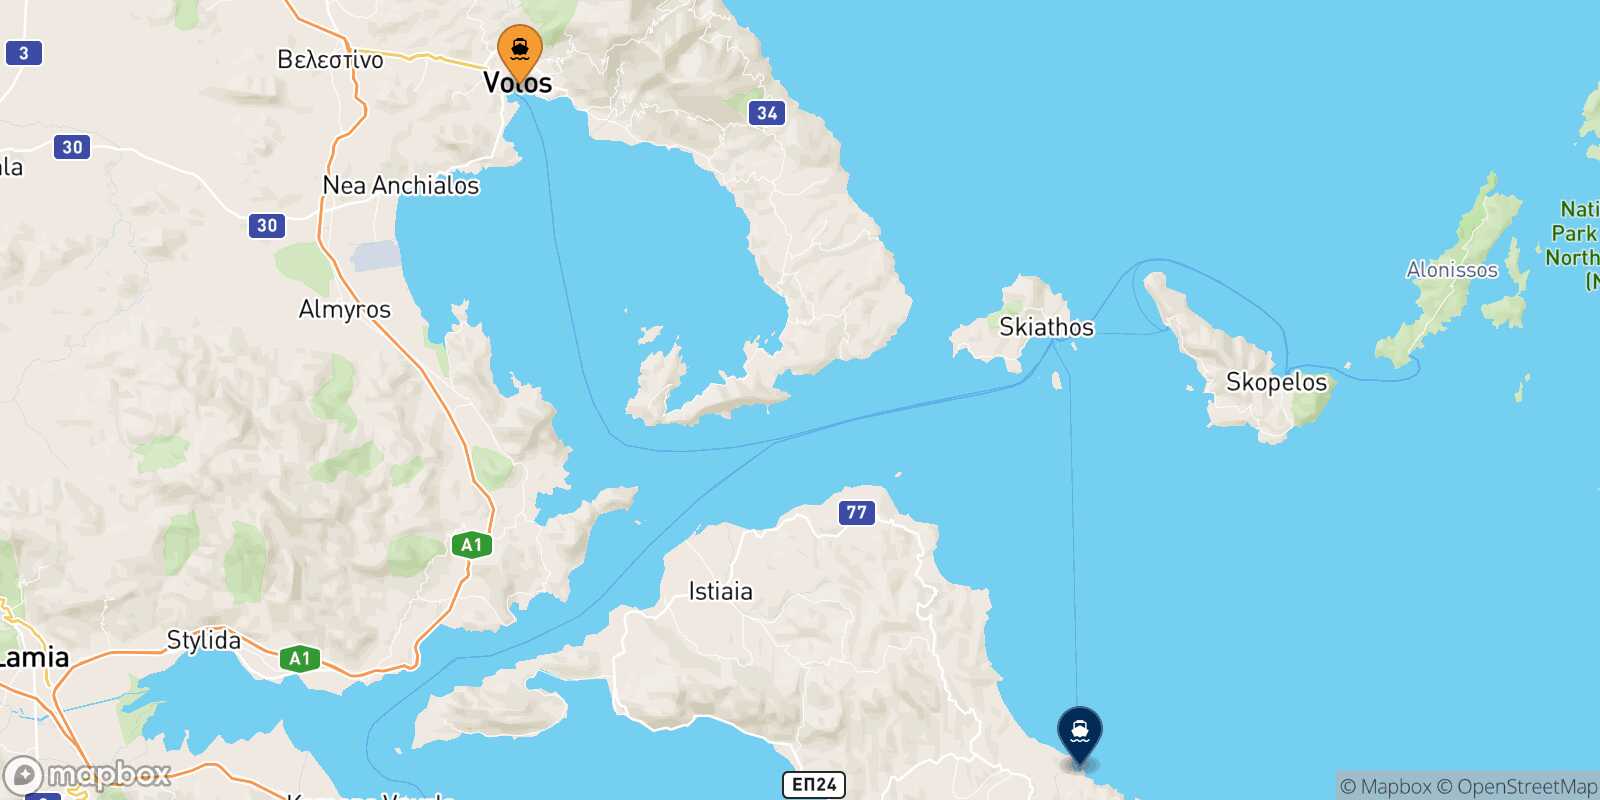 Volos Mantoudi (Evia) route map